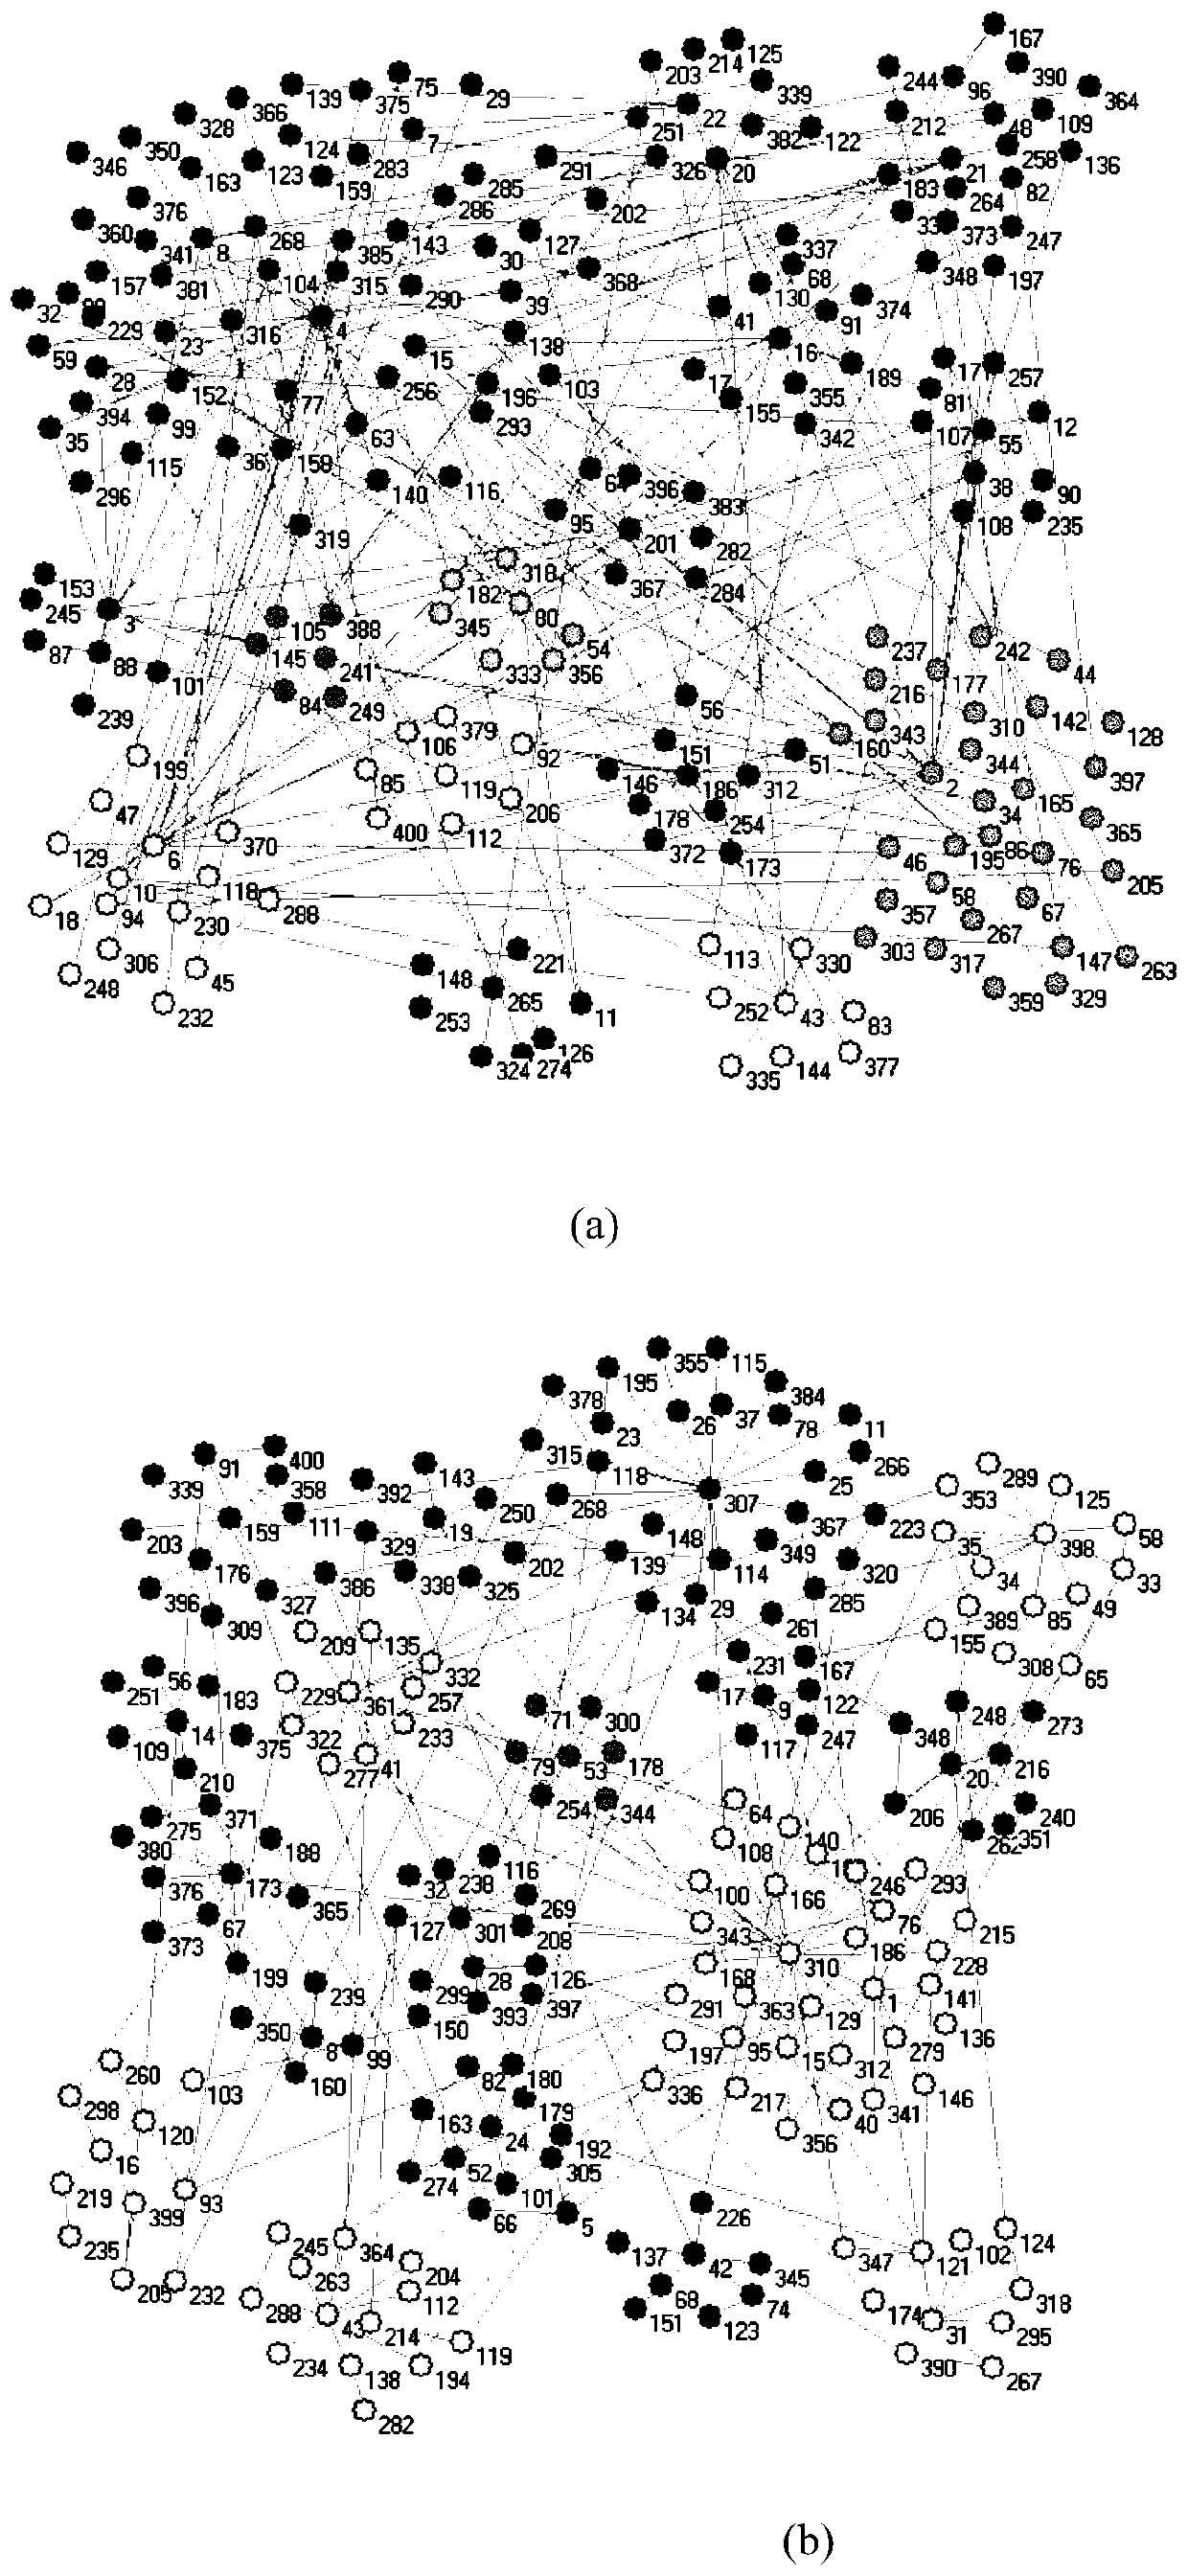 A multi-target dynamic network community division method based on a memetic framework